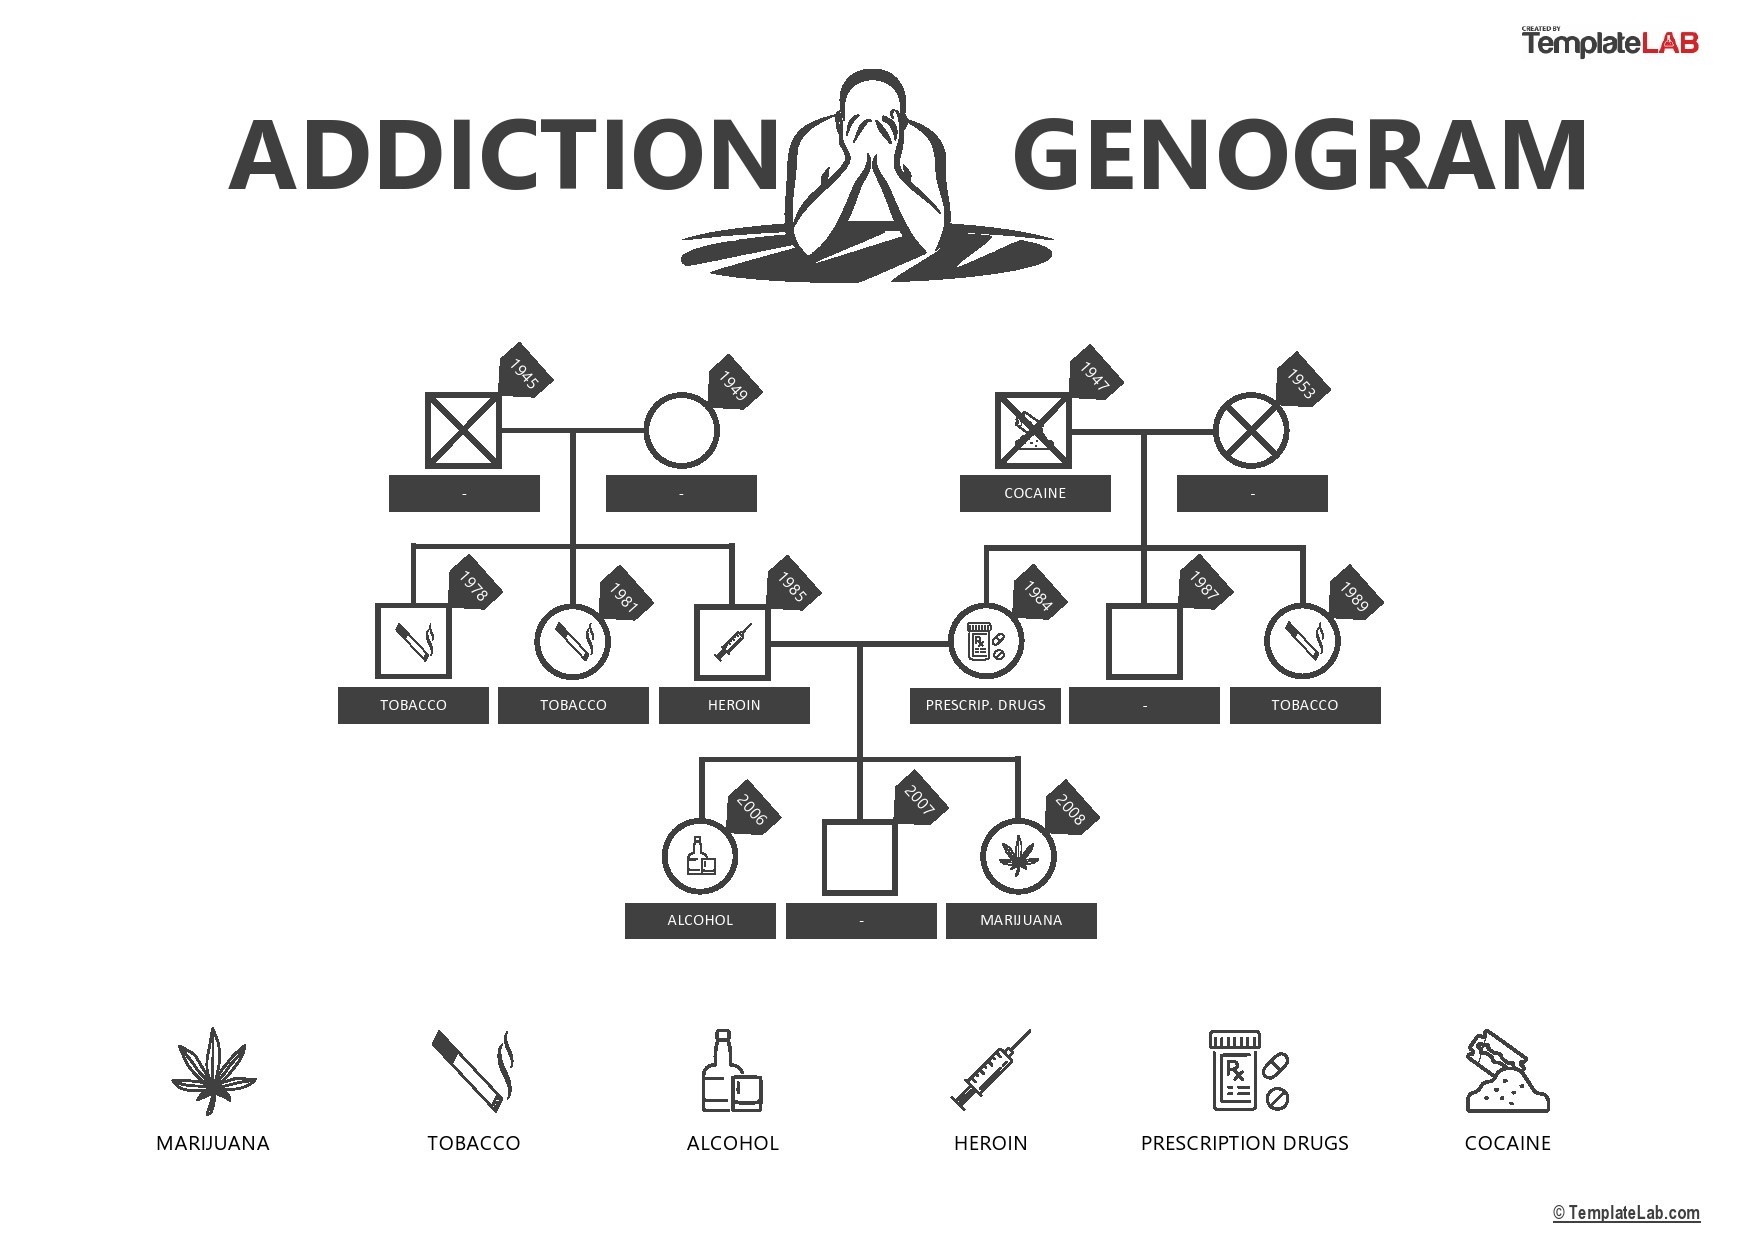 Free Genogram Addiction Template V2